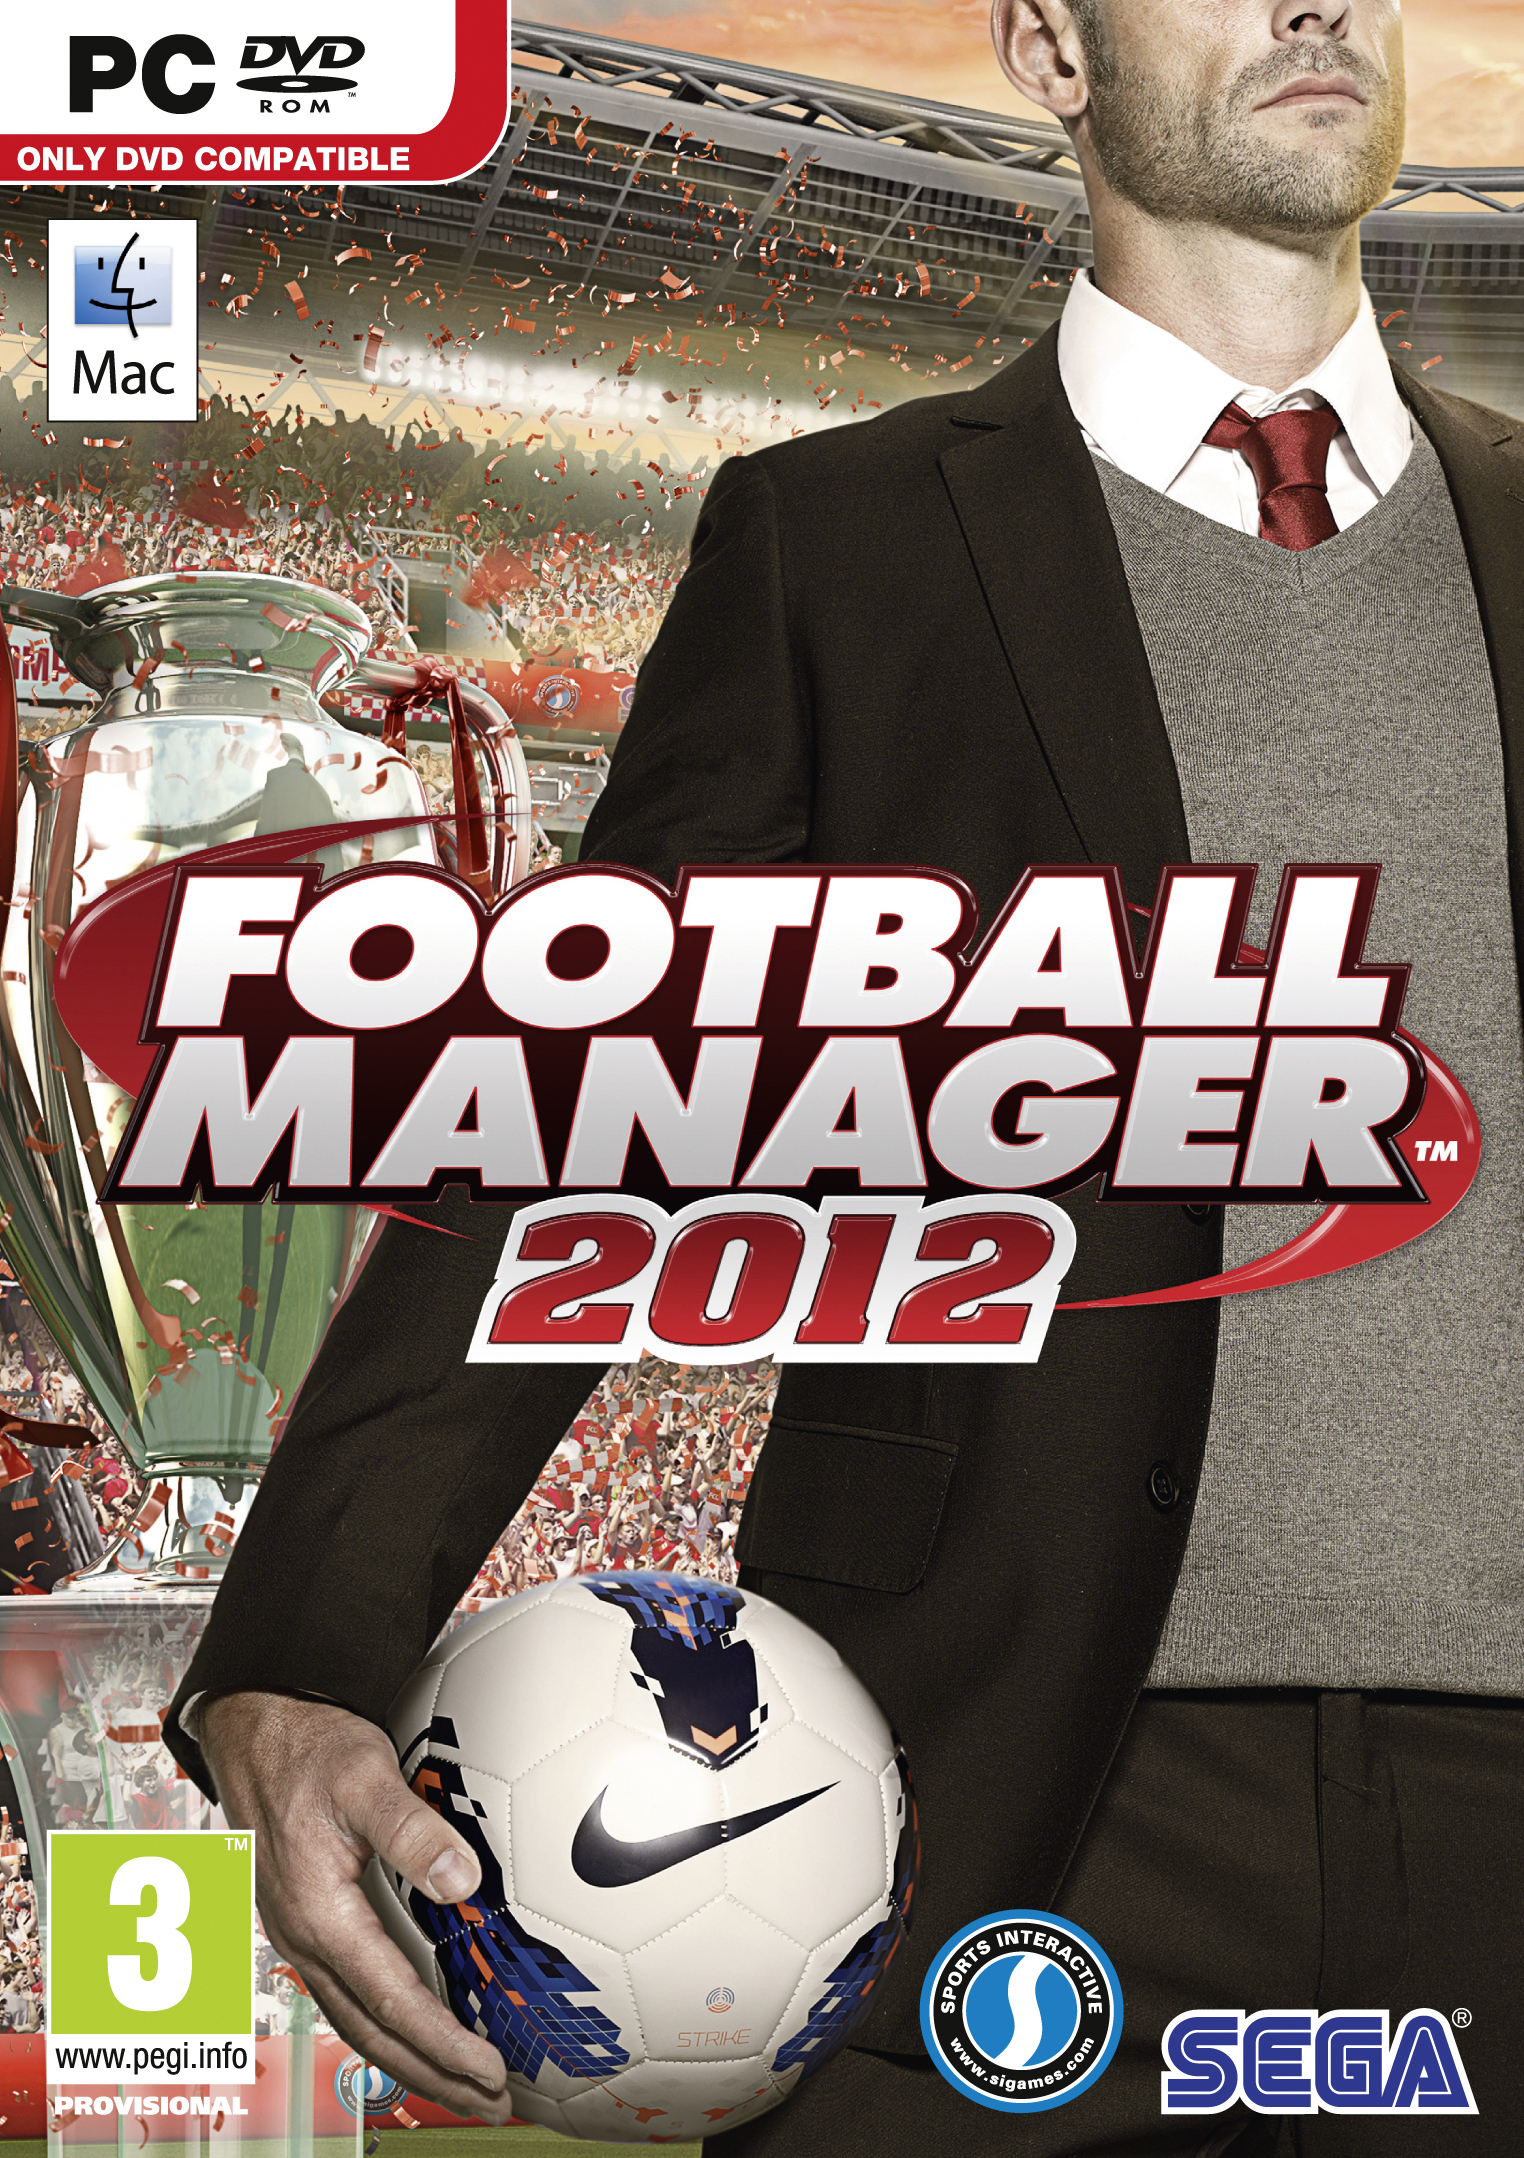 Spel, Premier League, Samuel Armenteros, Football Manager, Dator, Fotboll